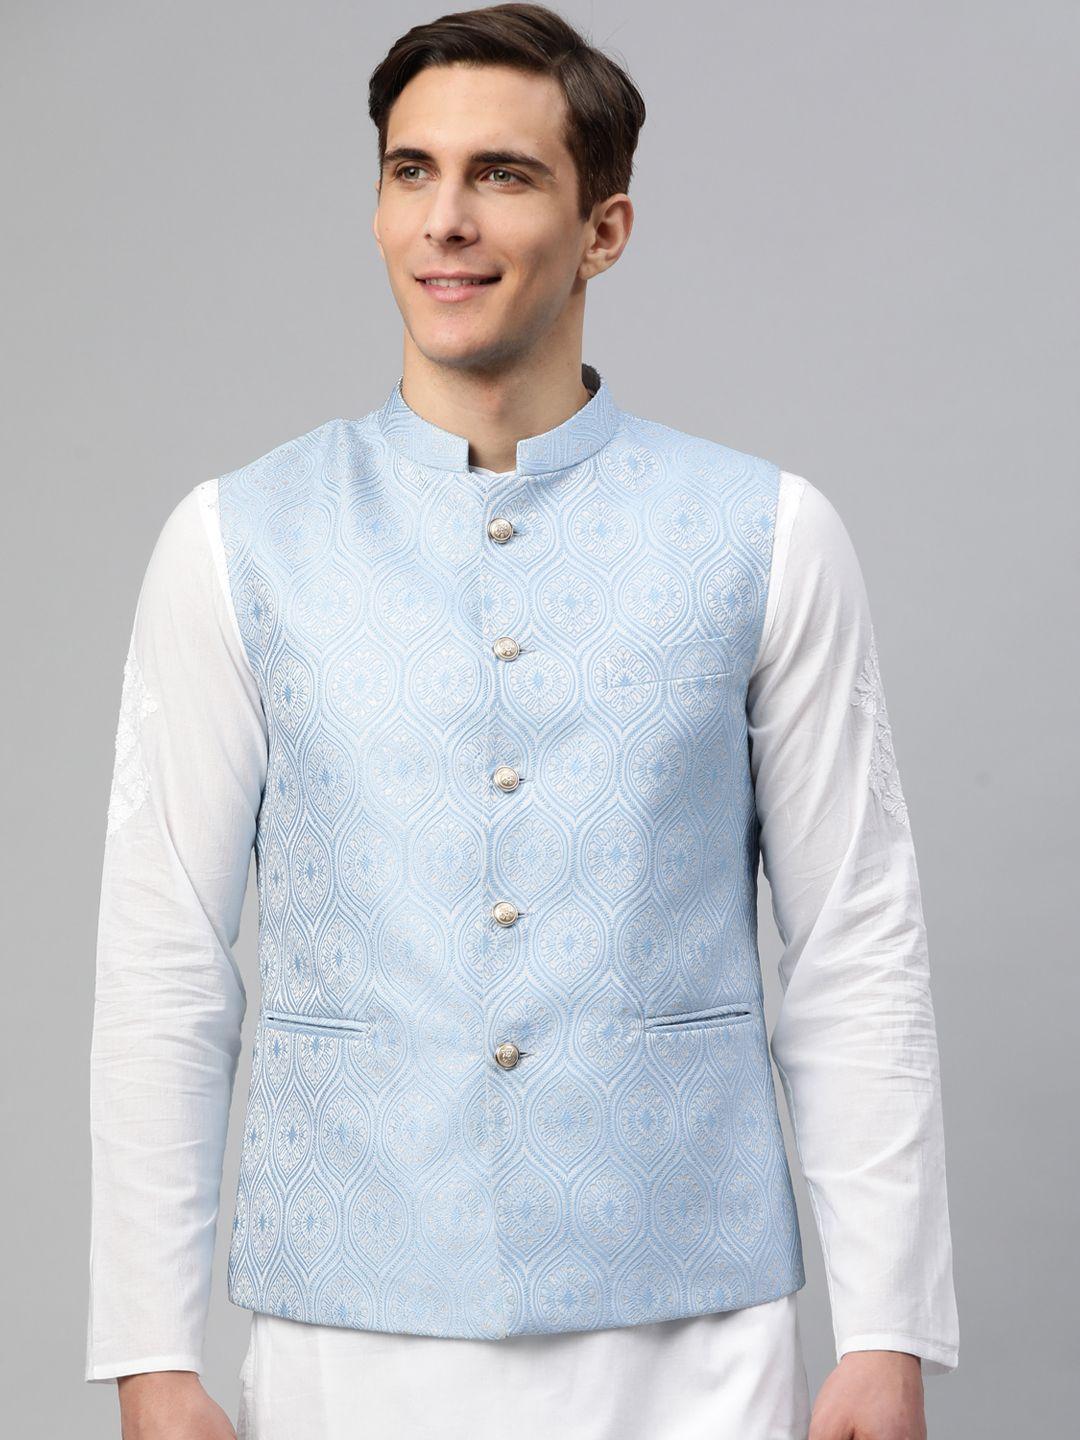 manq-blue-&-white-ethnic-motifs-jaquard-woven-design-nehru-jacket